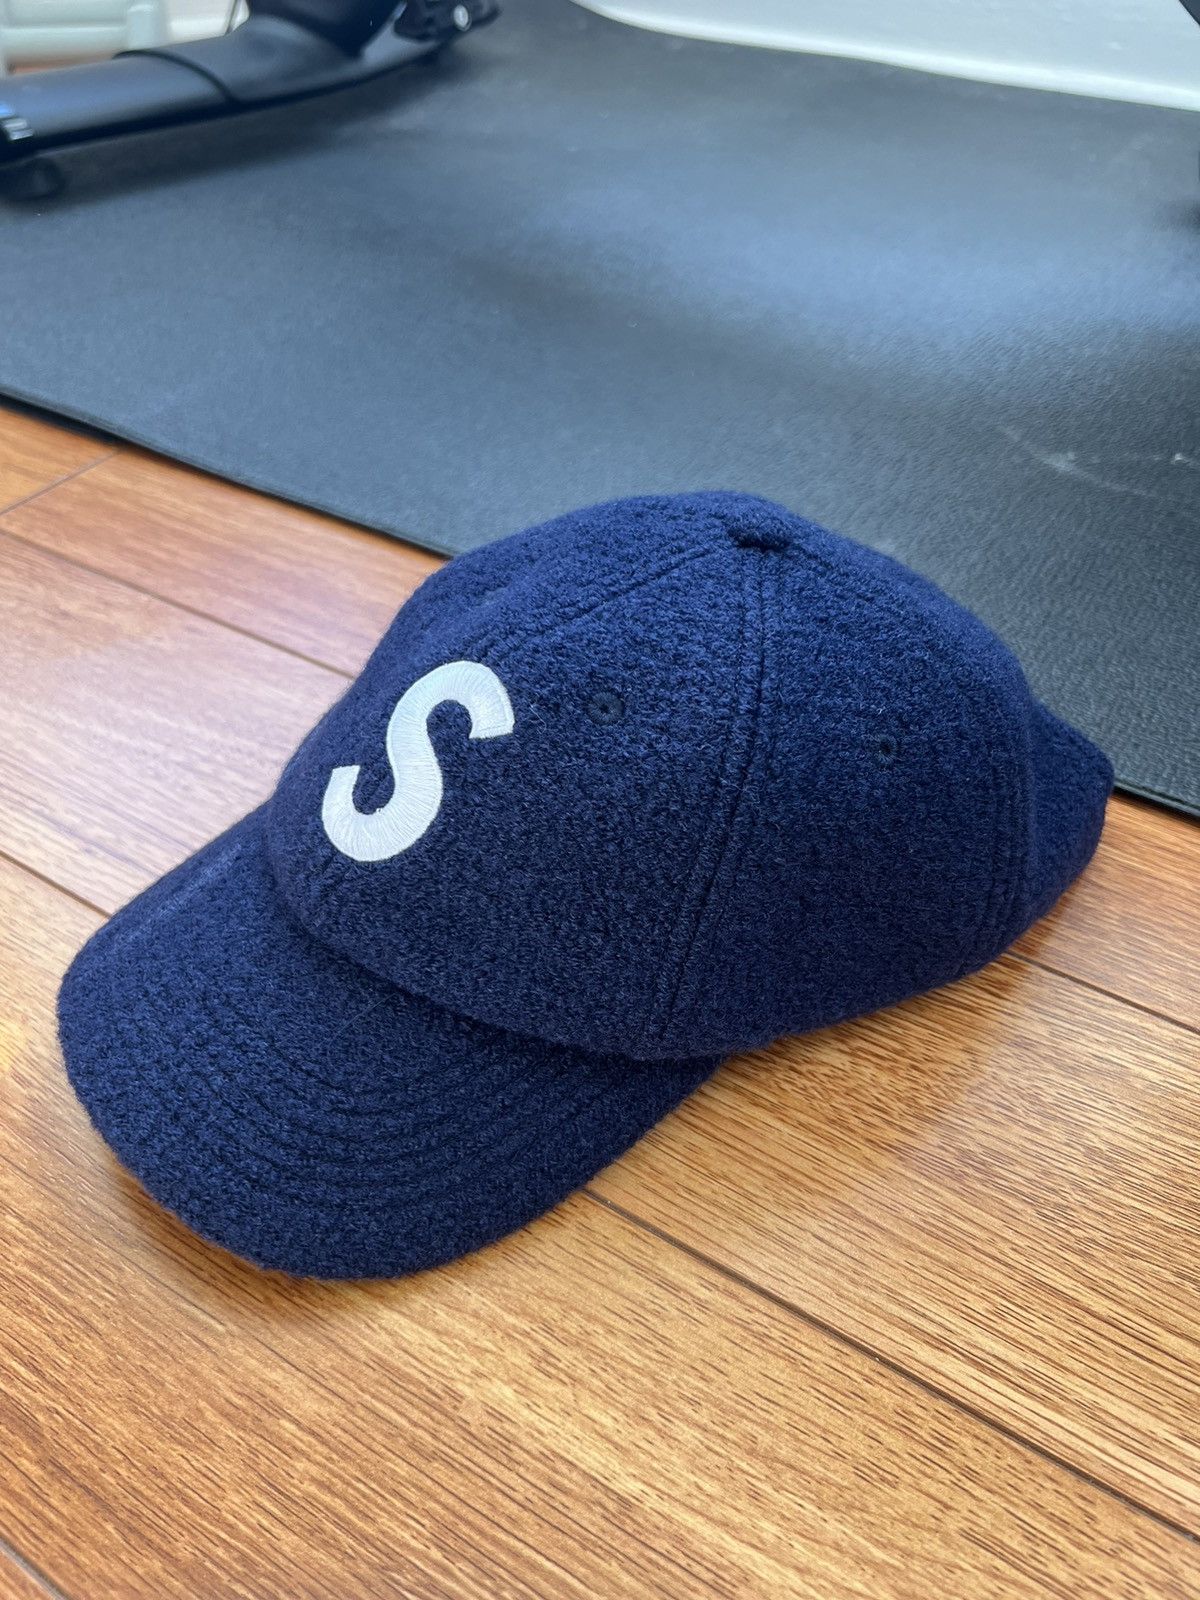 Supreme Supreme S Logo Wool Hat | Grailed